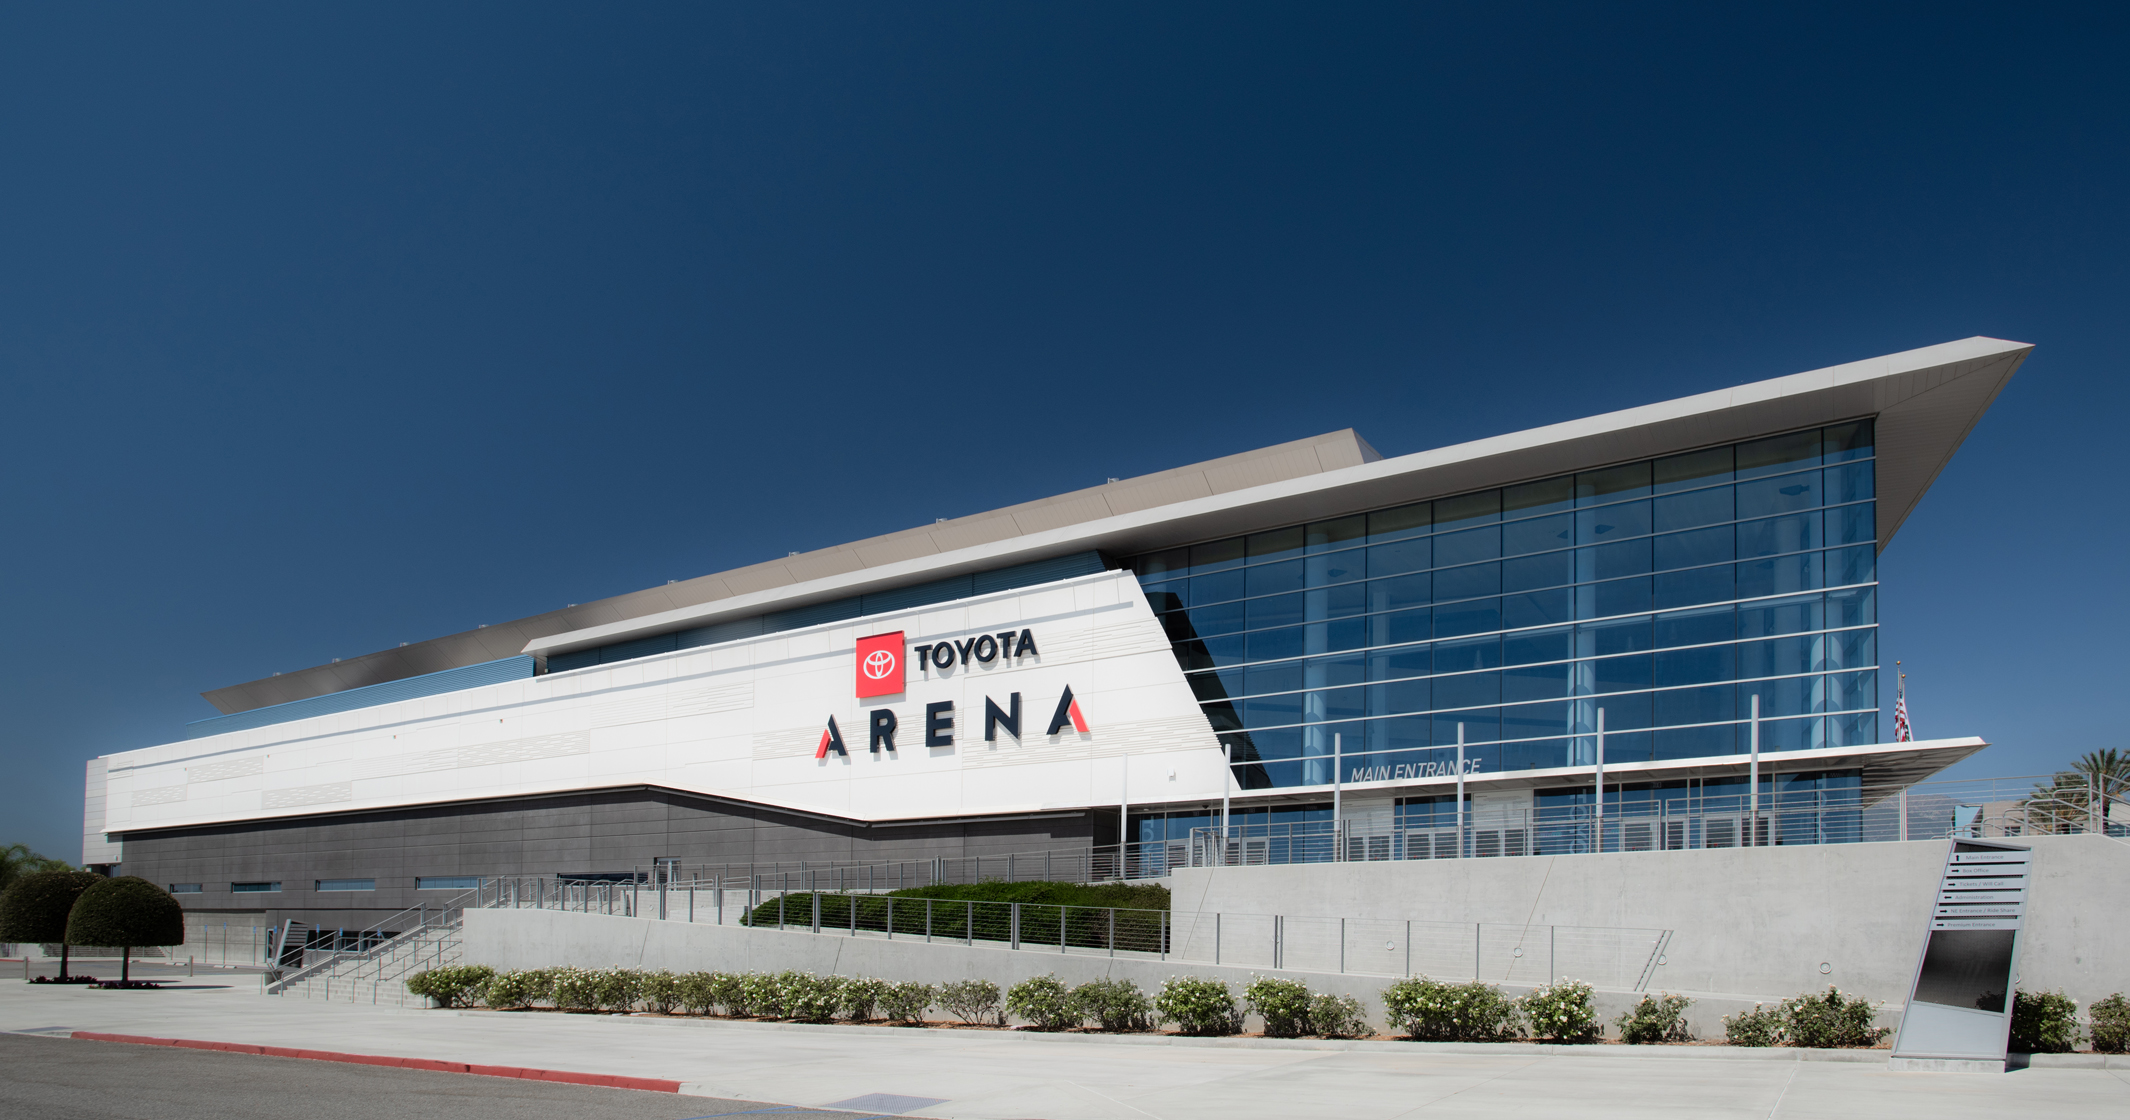 The Toyota Arena